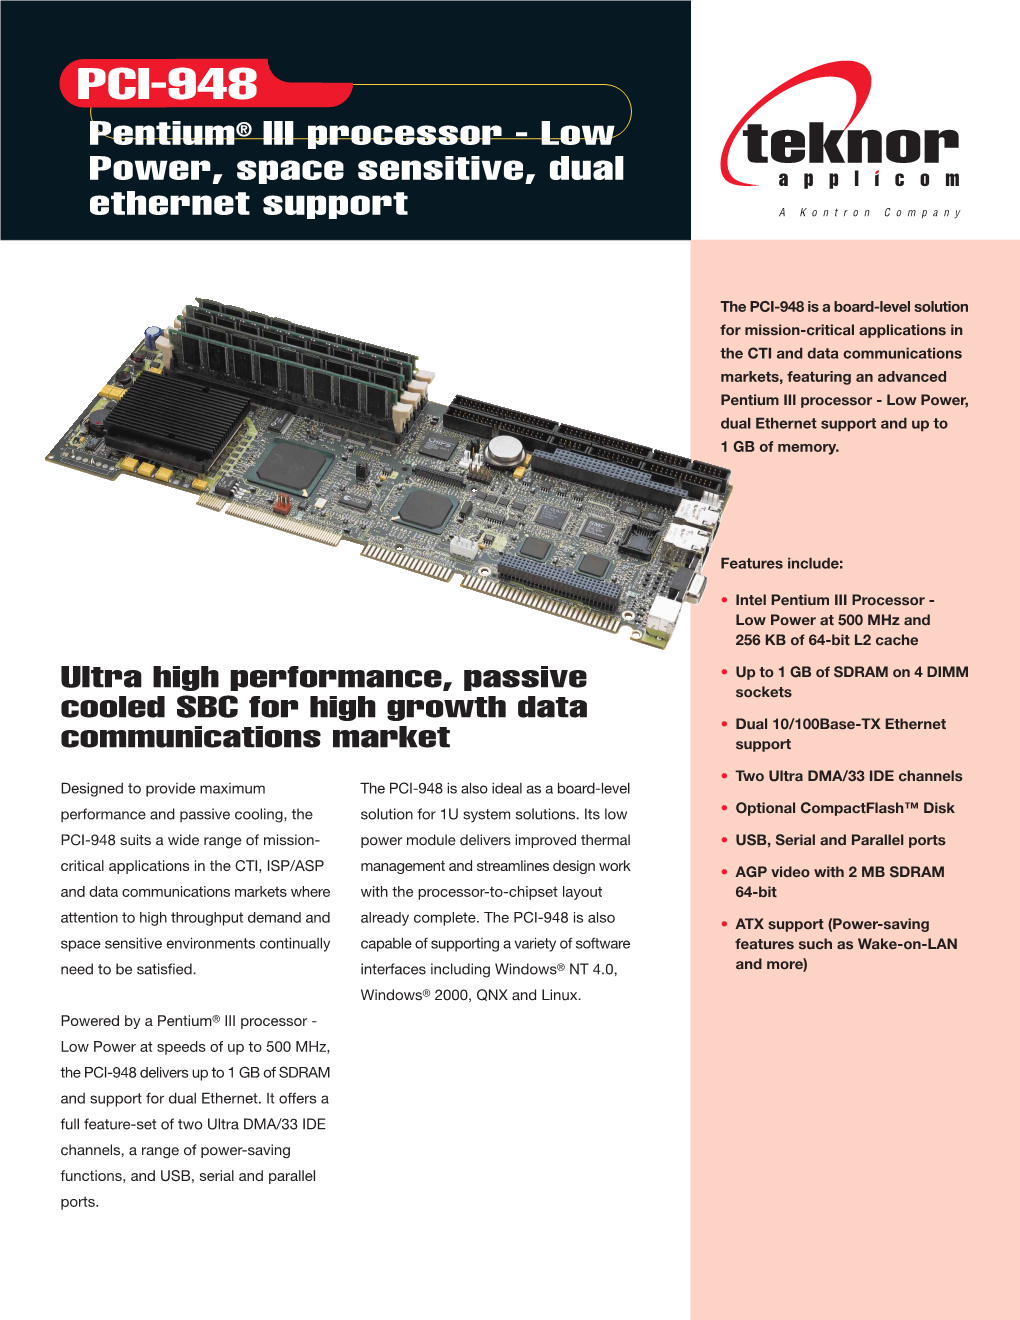 PCI-948 Pentium® III Processor - Low Power, Space Sensitive, Dual Ethernet Support